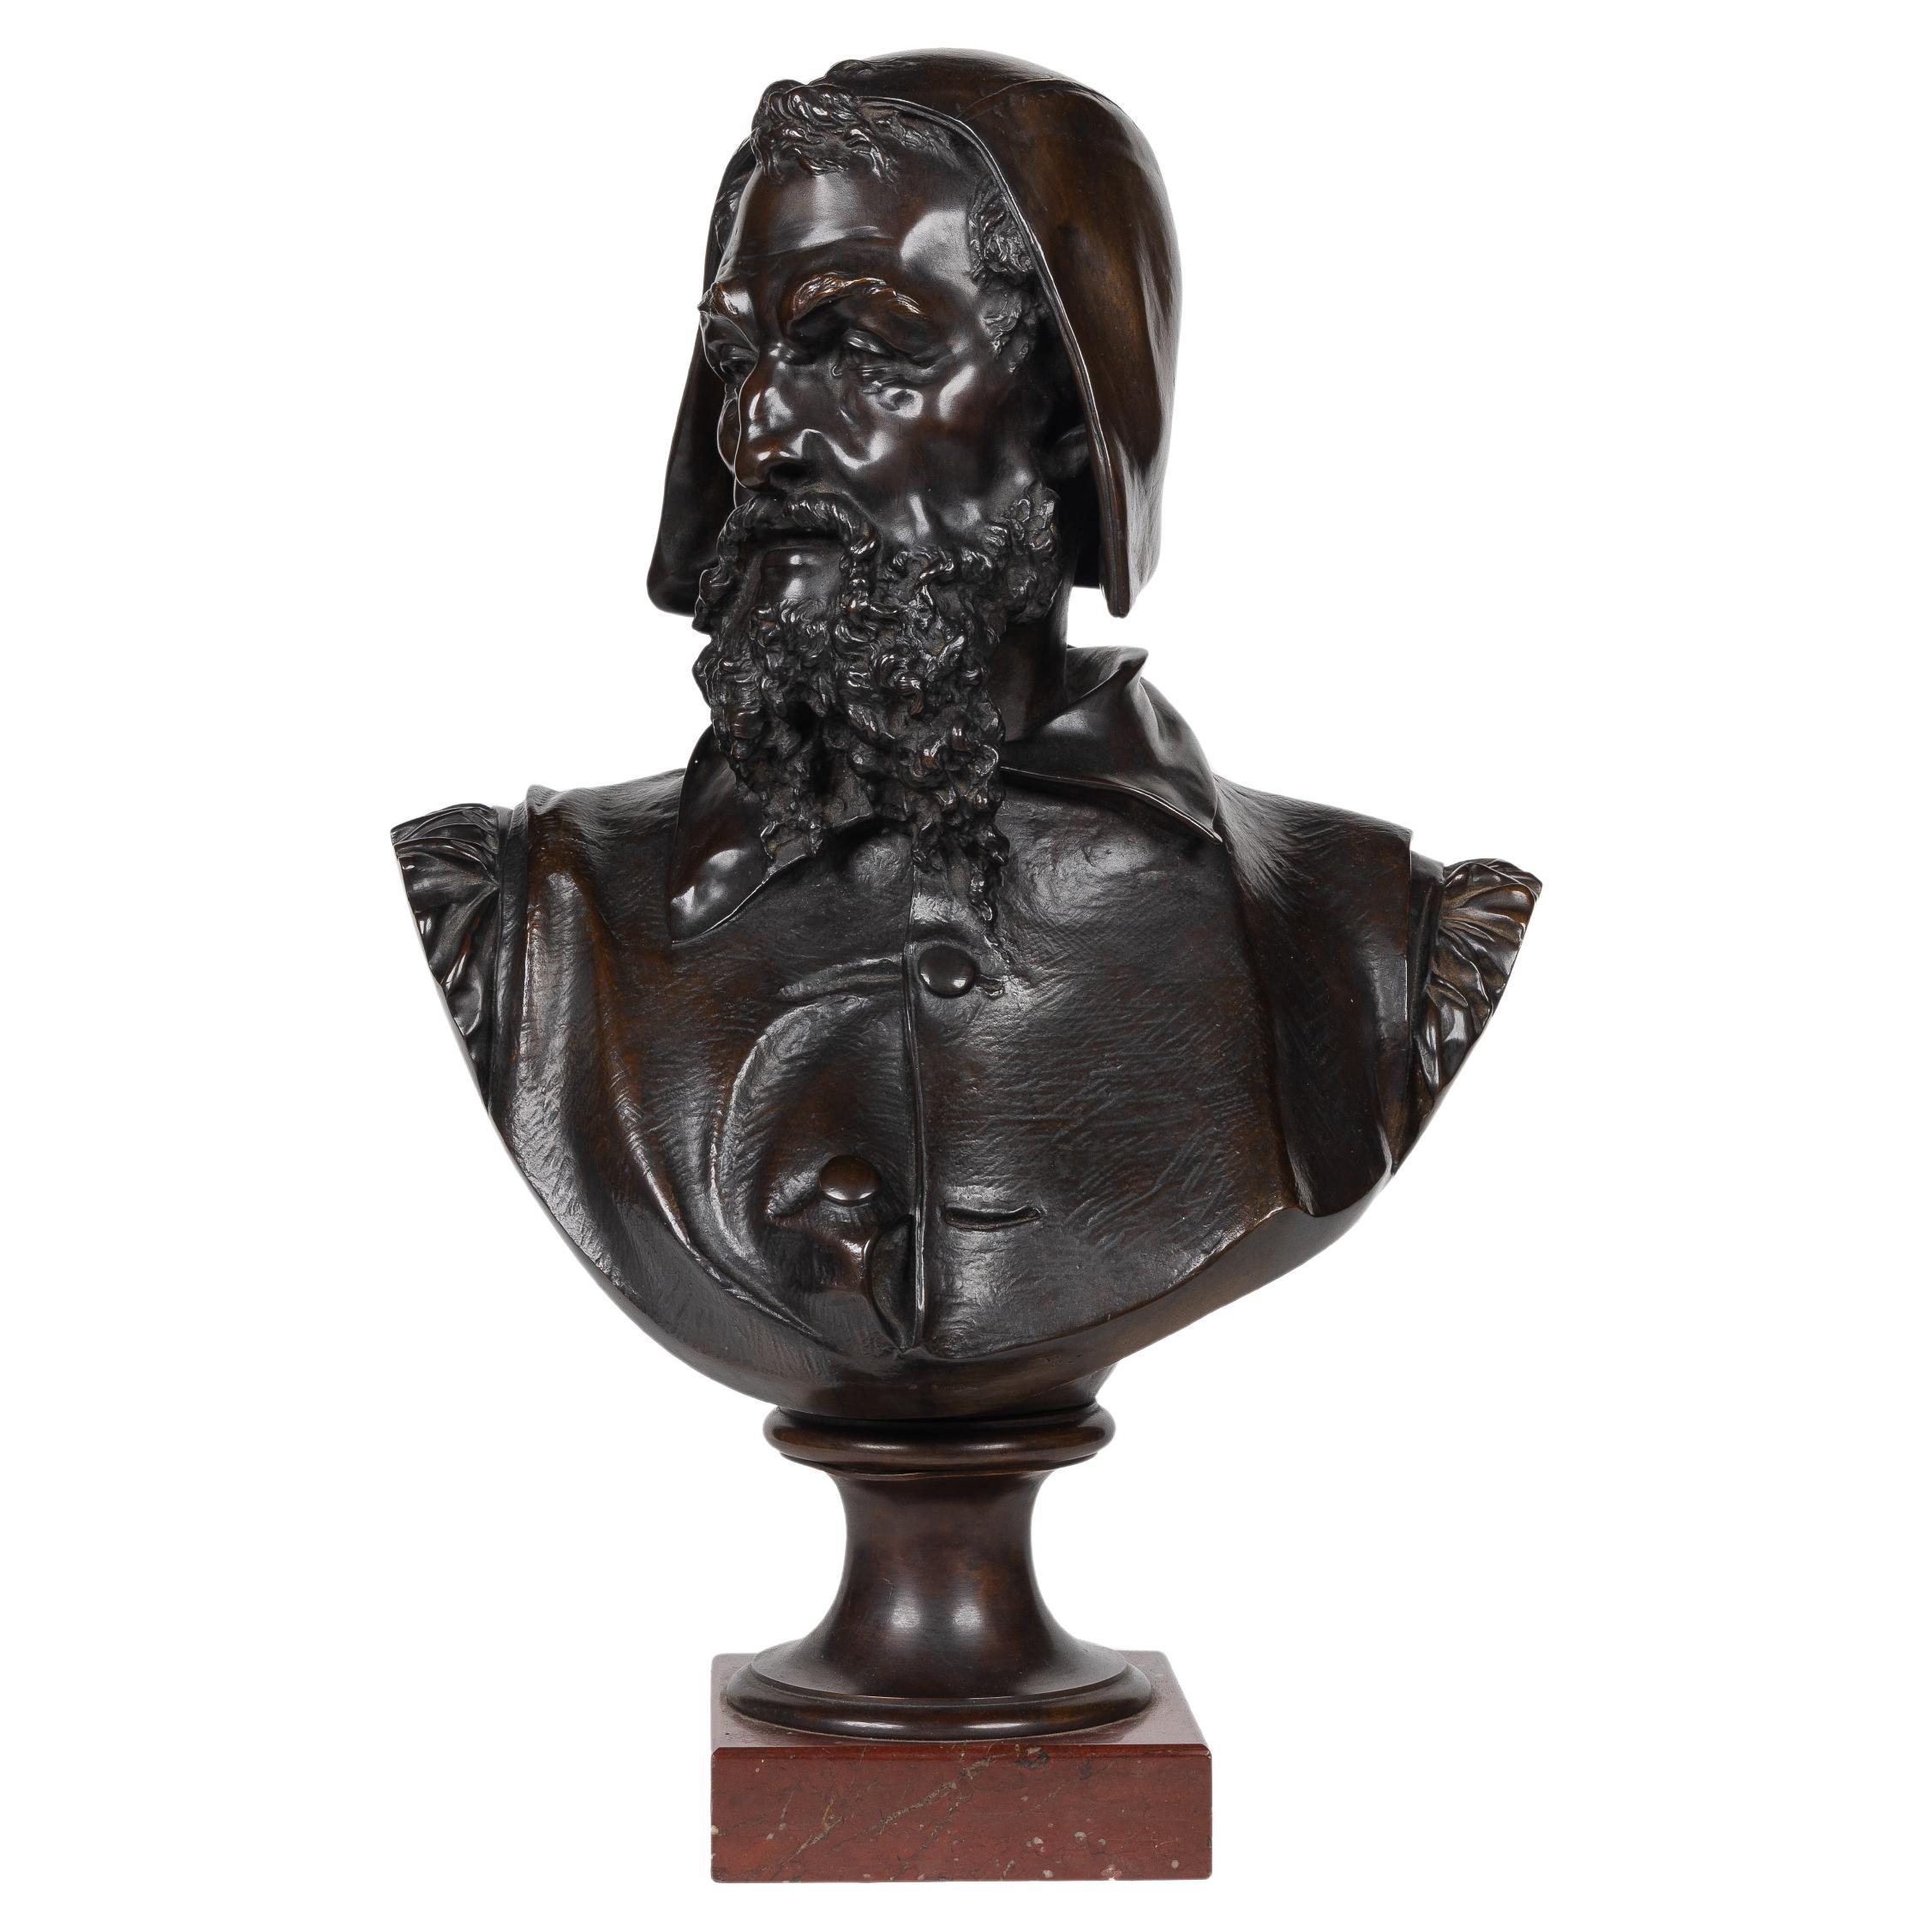 Albert-Ernest Carrier-Belleuse, A Rare and Important Bronze Bust of Michelangelo